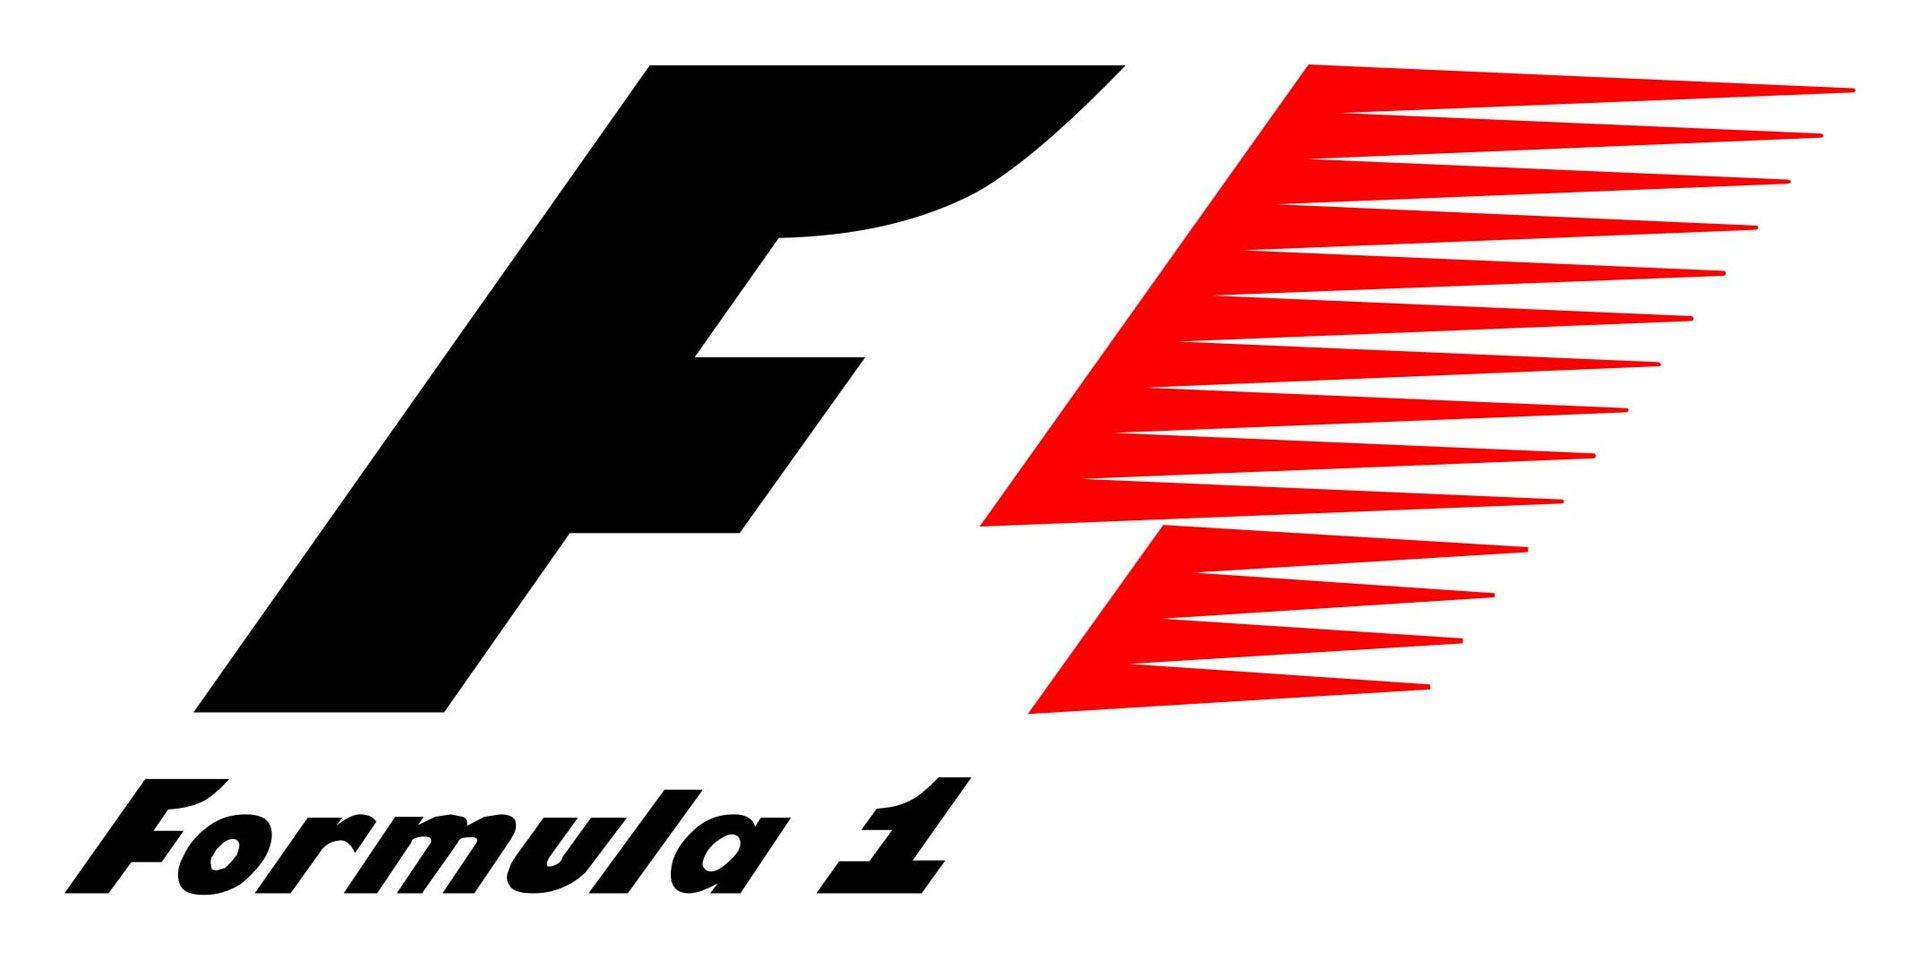 Formula 1 Logo - Old F1 logo was 